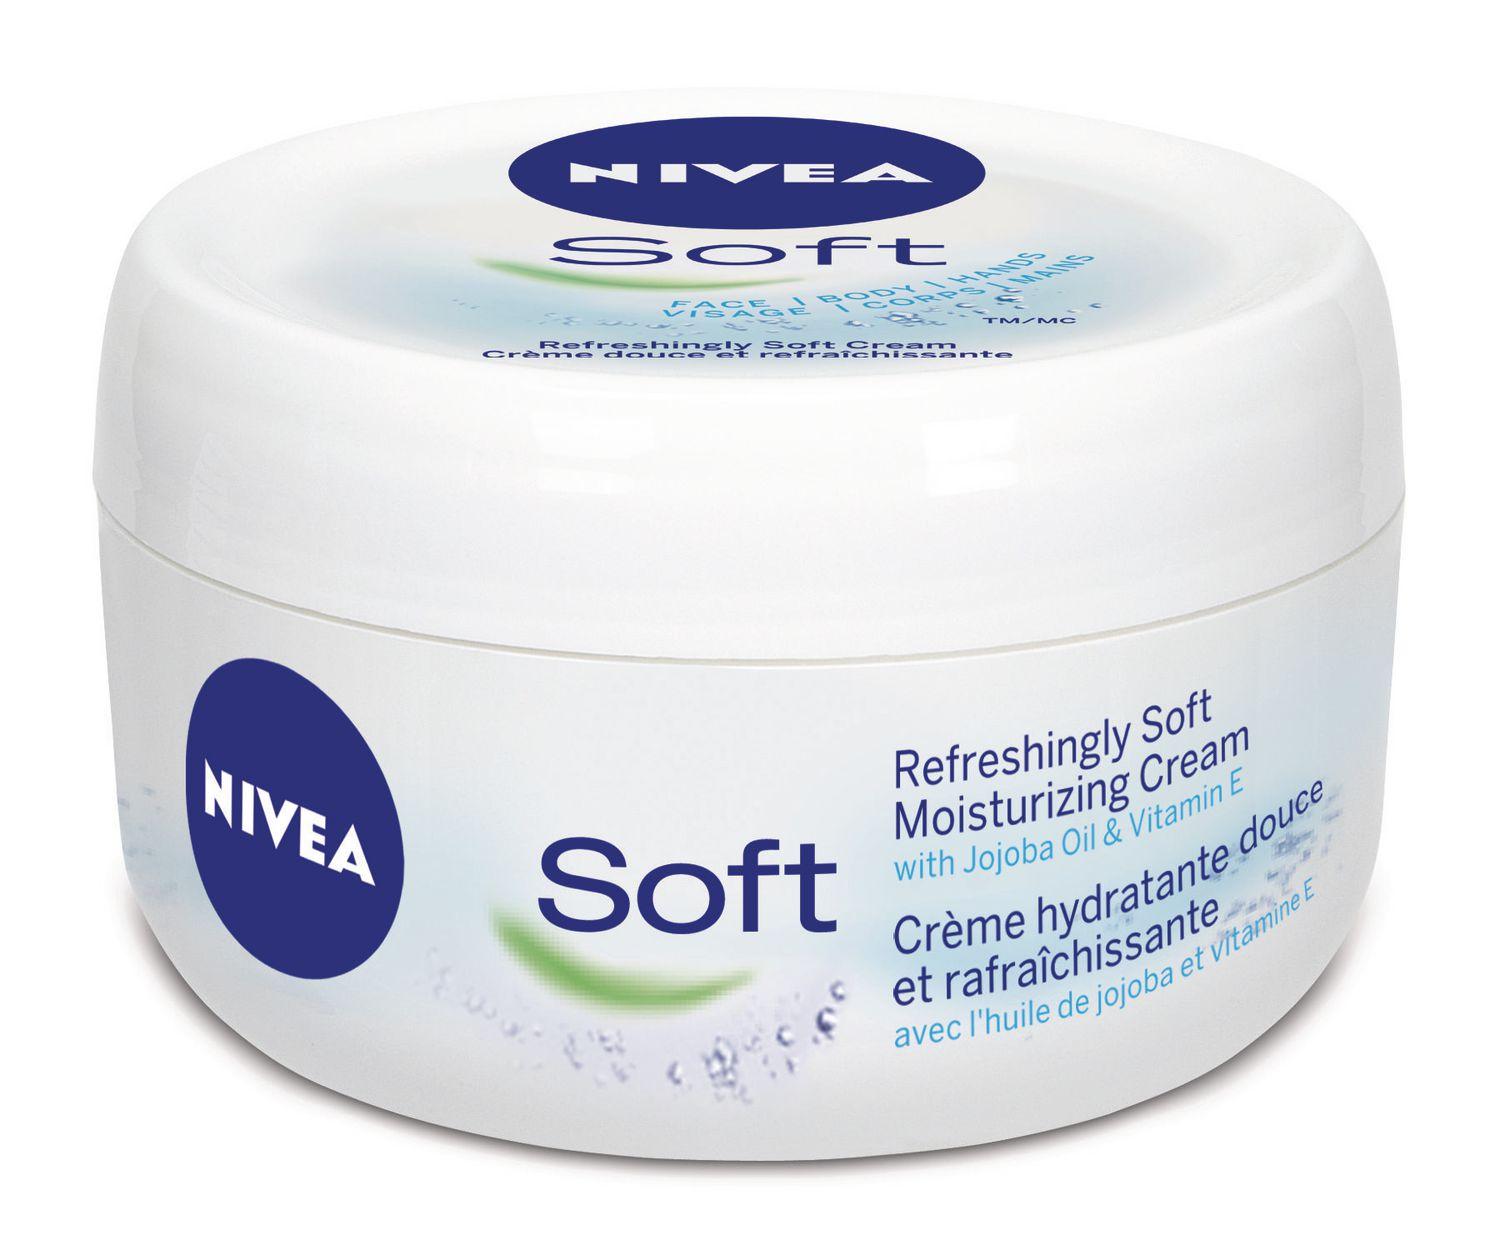 Nivea Cream [soft] 100ml product available at family pharmacy online buy now at qatar doha